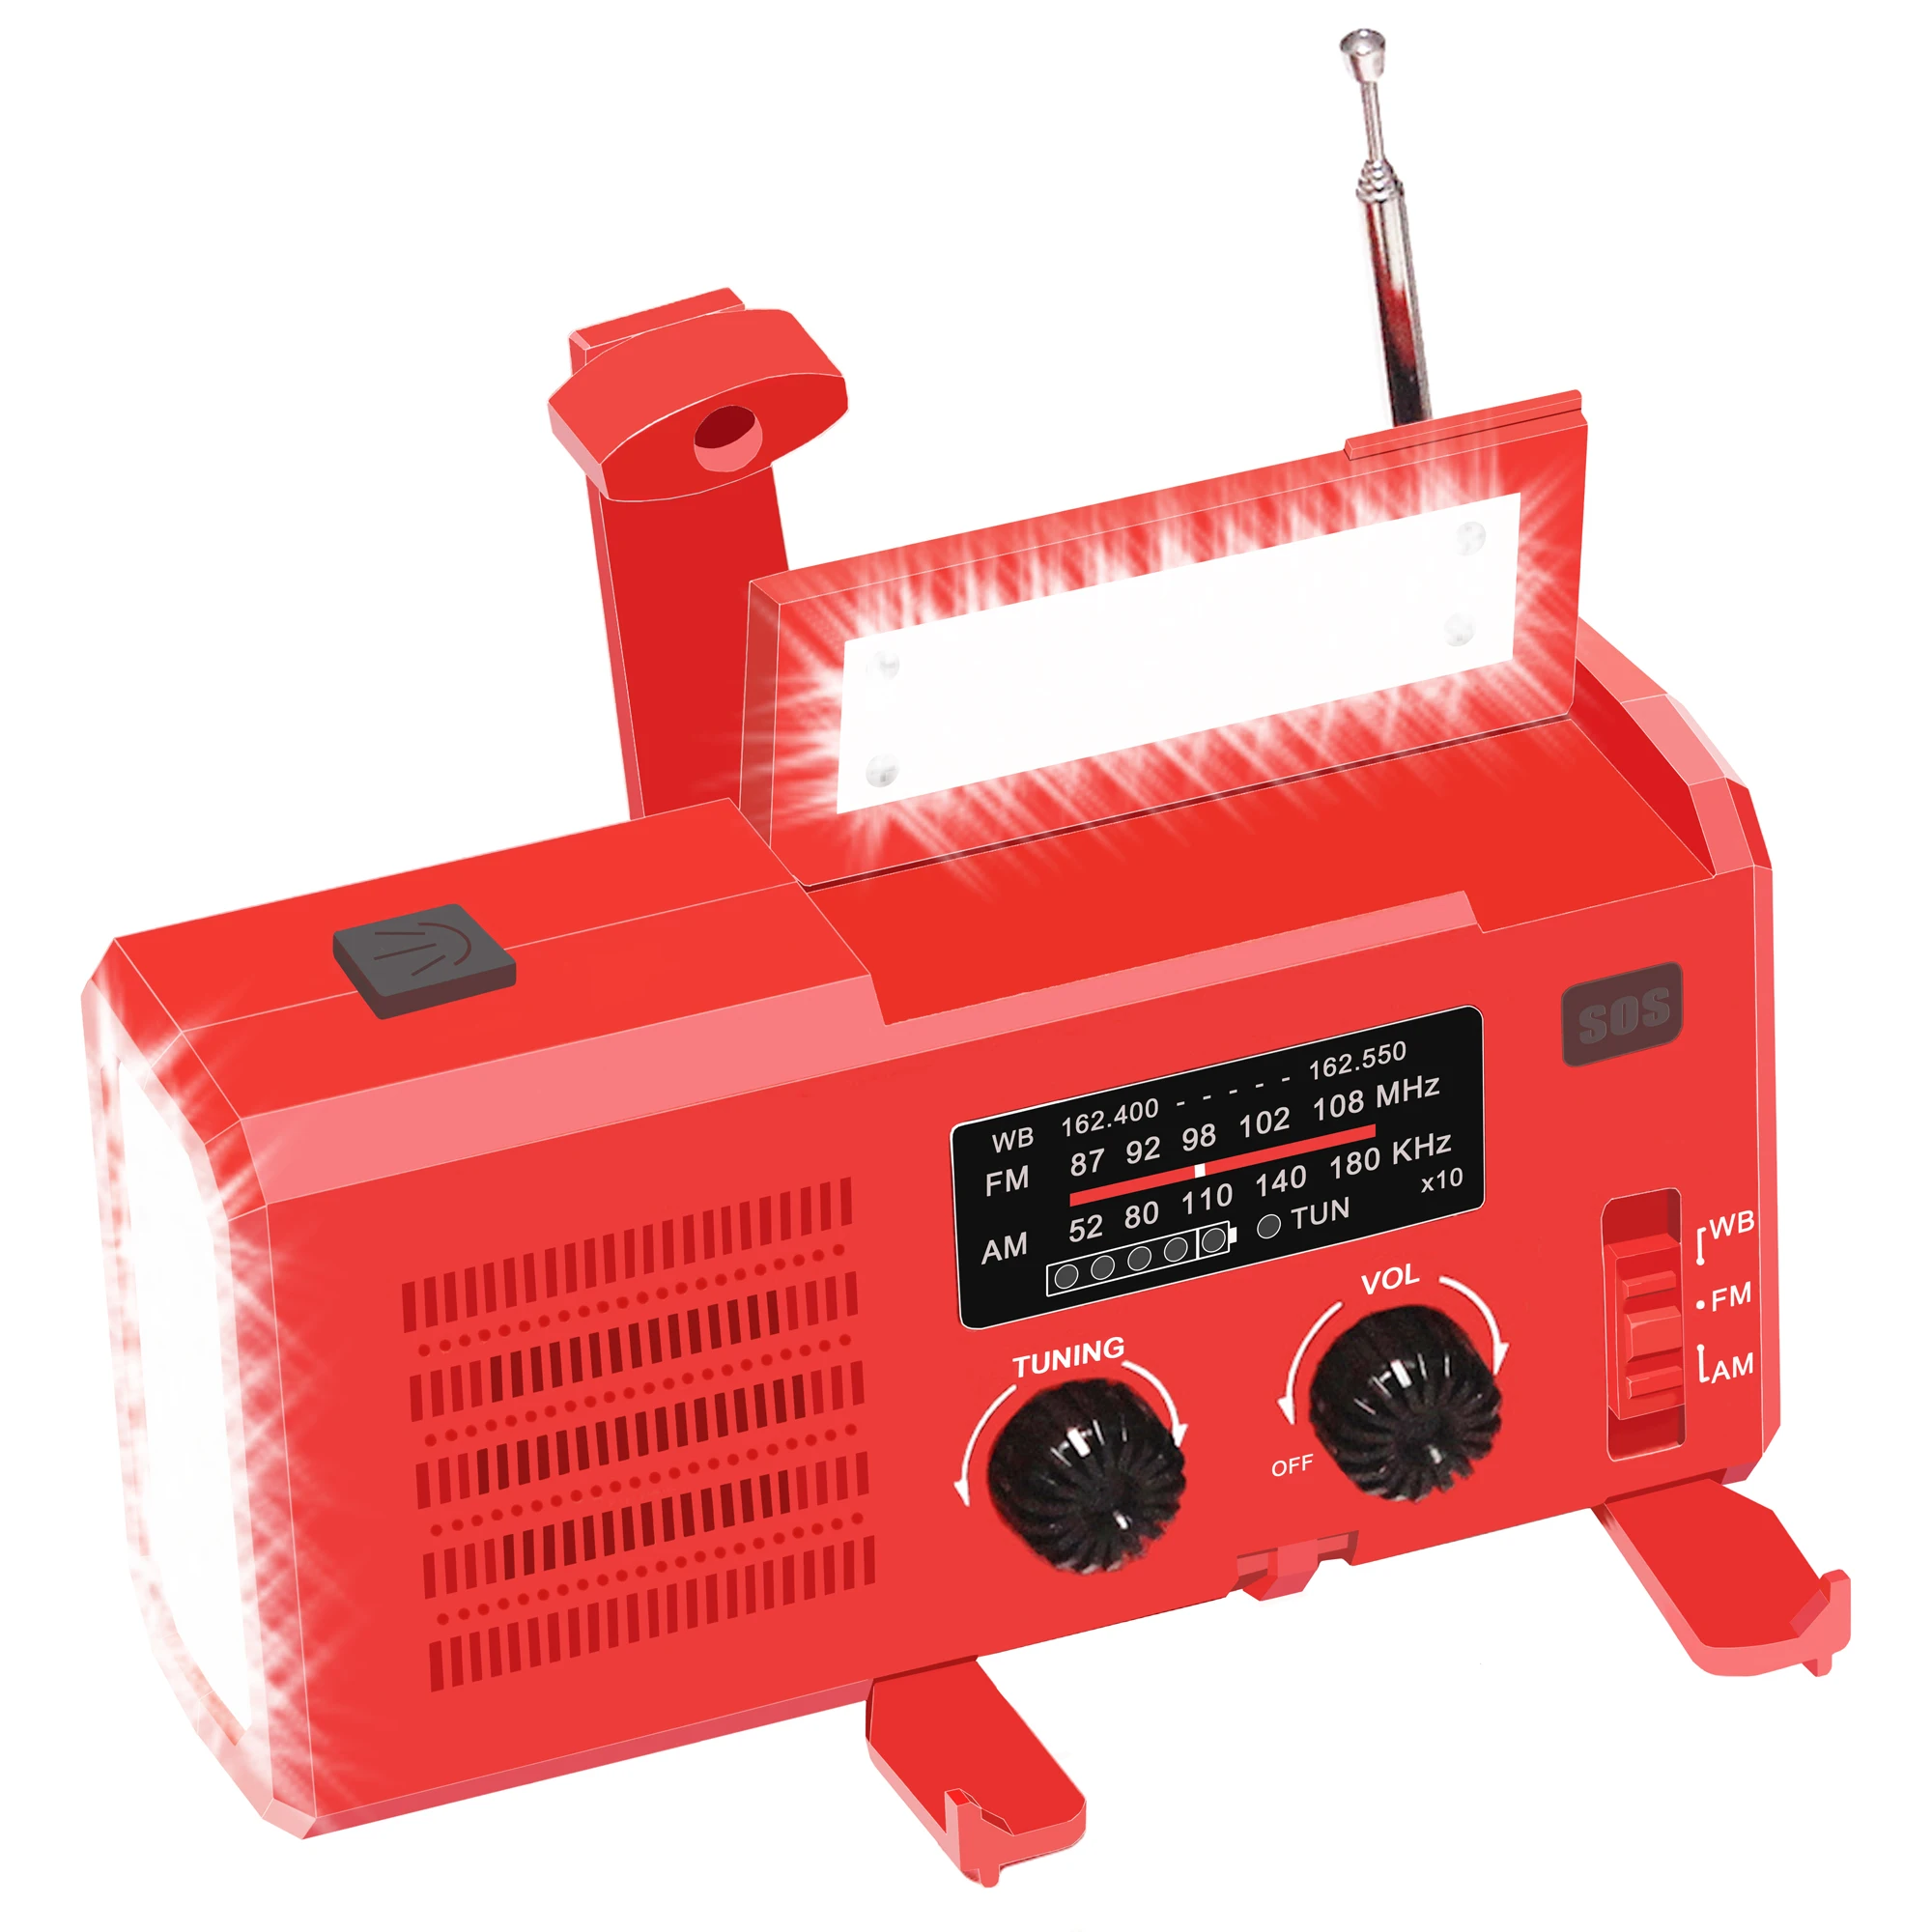 

Portable Hand Crank Solar Radio AM/FM/NOAA Emergency Radio 4000mAH Battery 3LED Flashlight SOS Alarm Power Bank Survival Gear